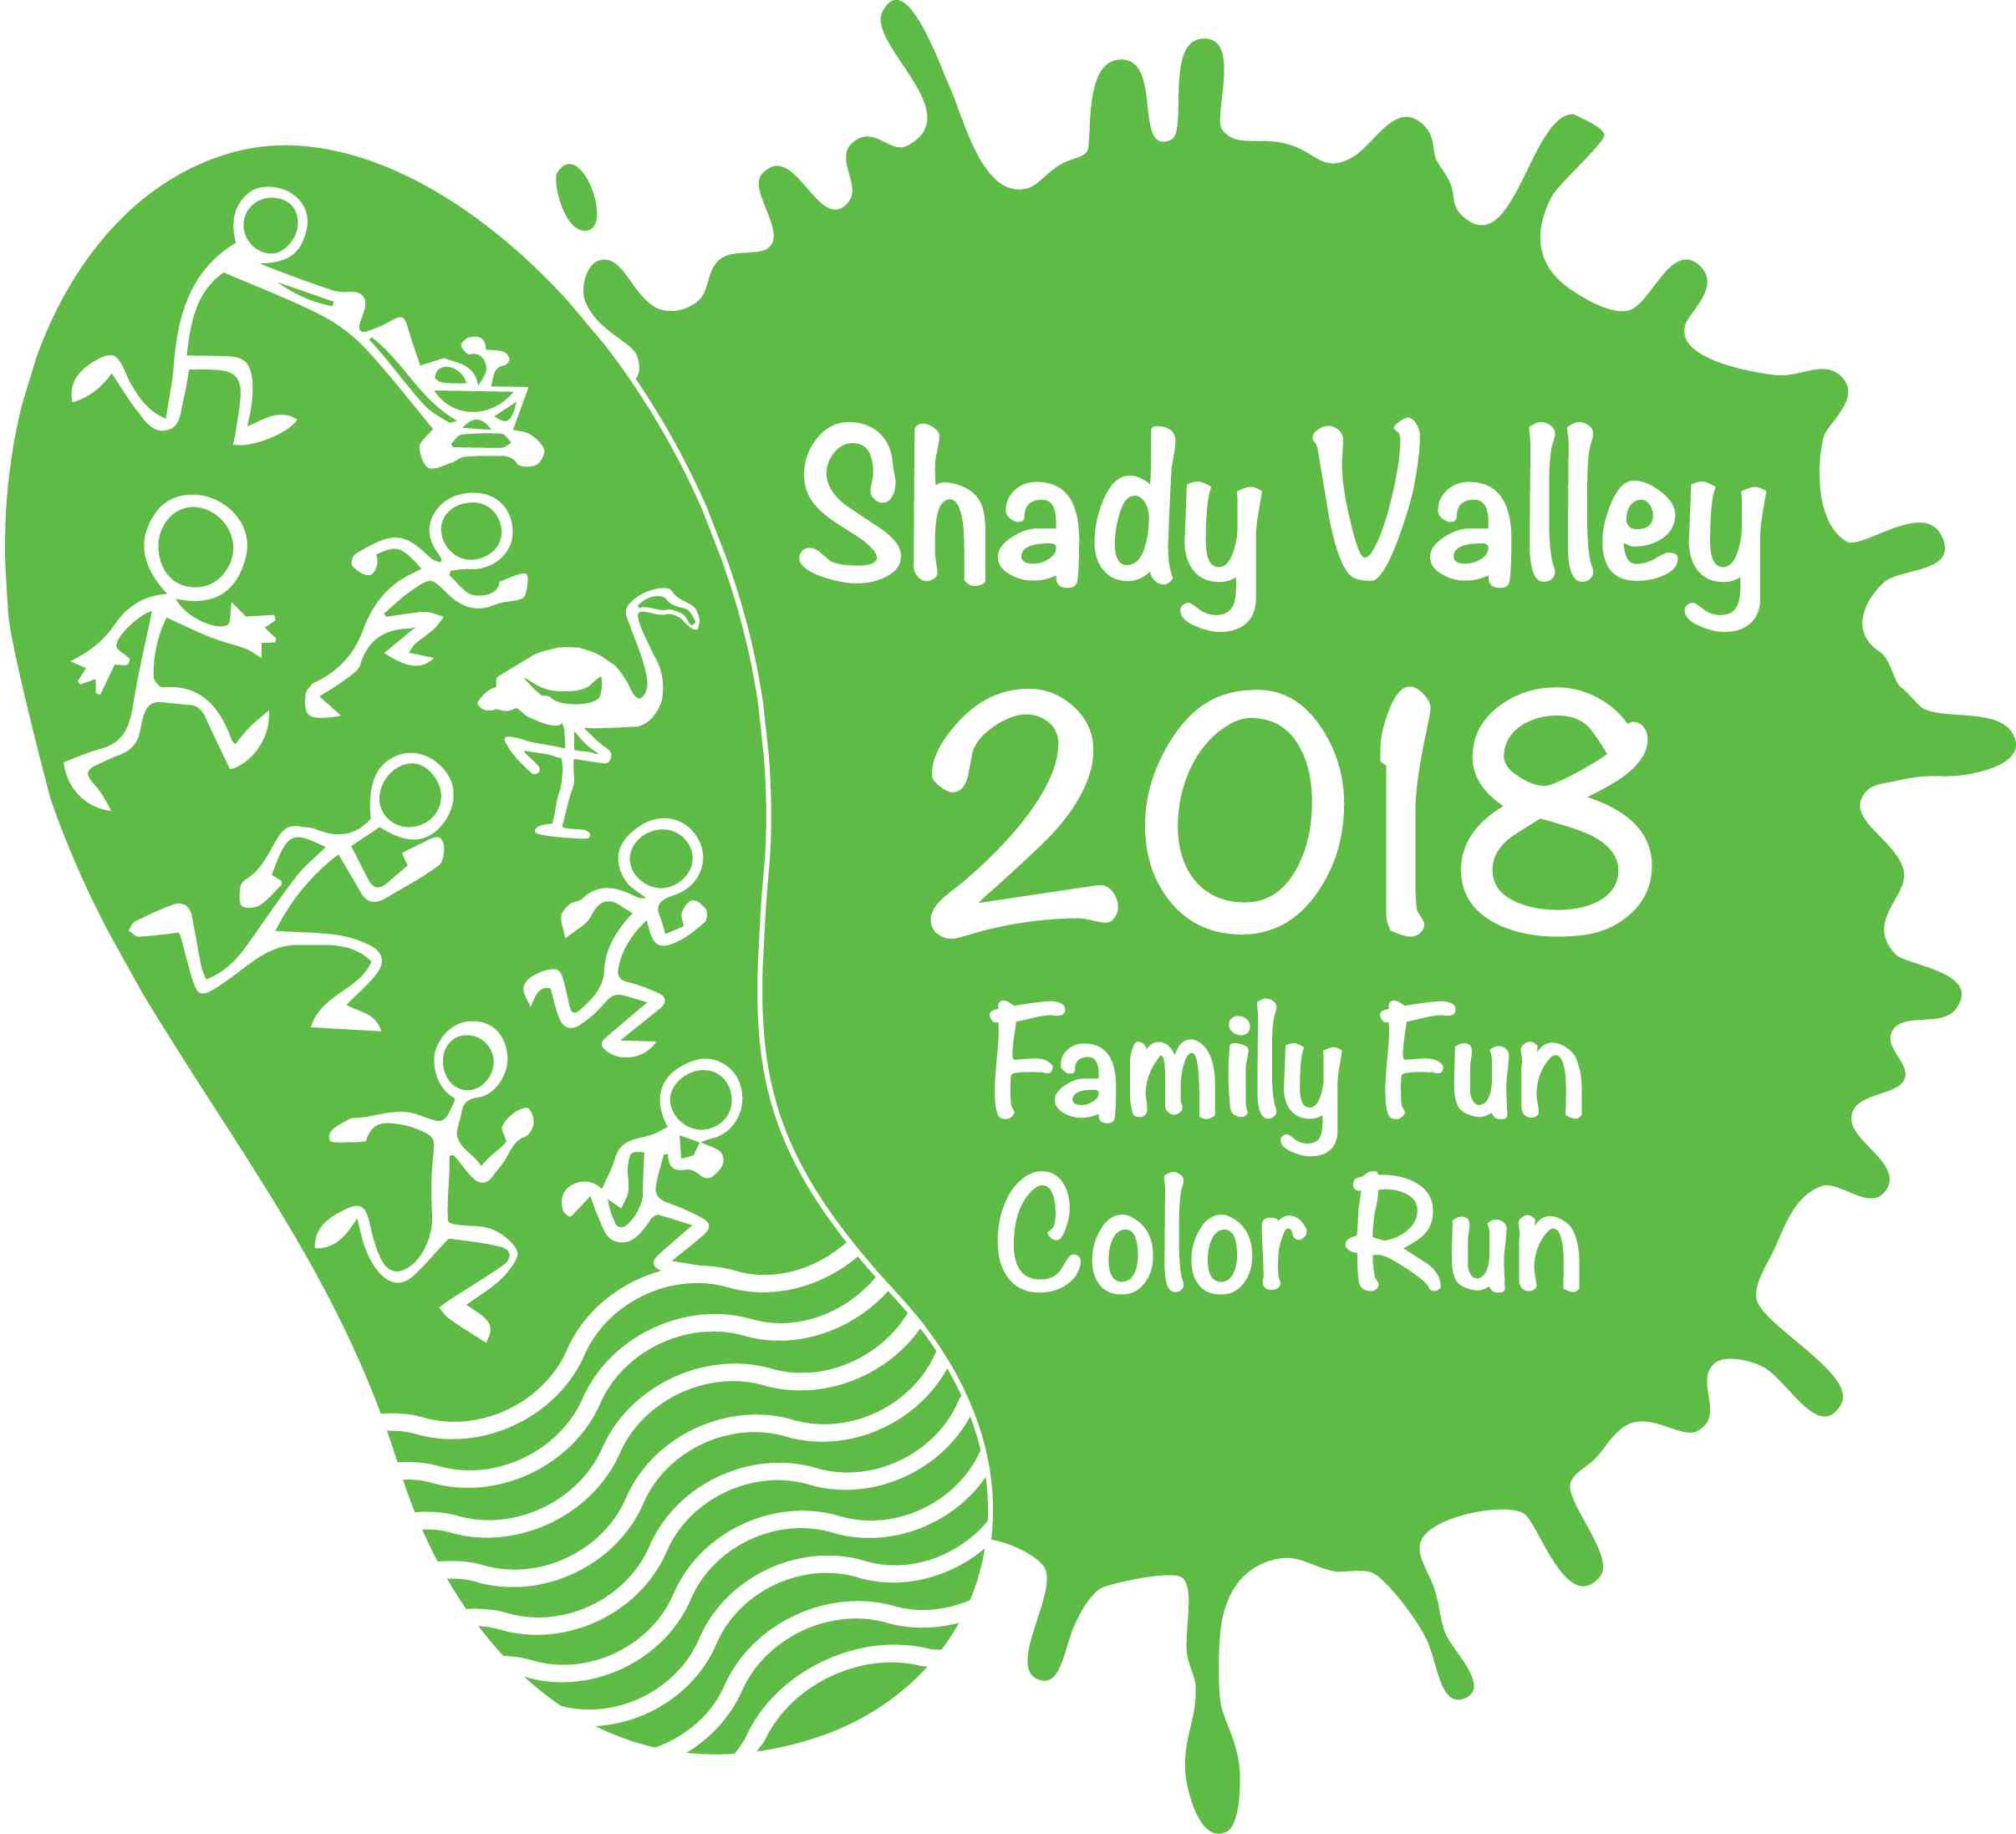 Shady Valley Family Fun Color Run Image